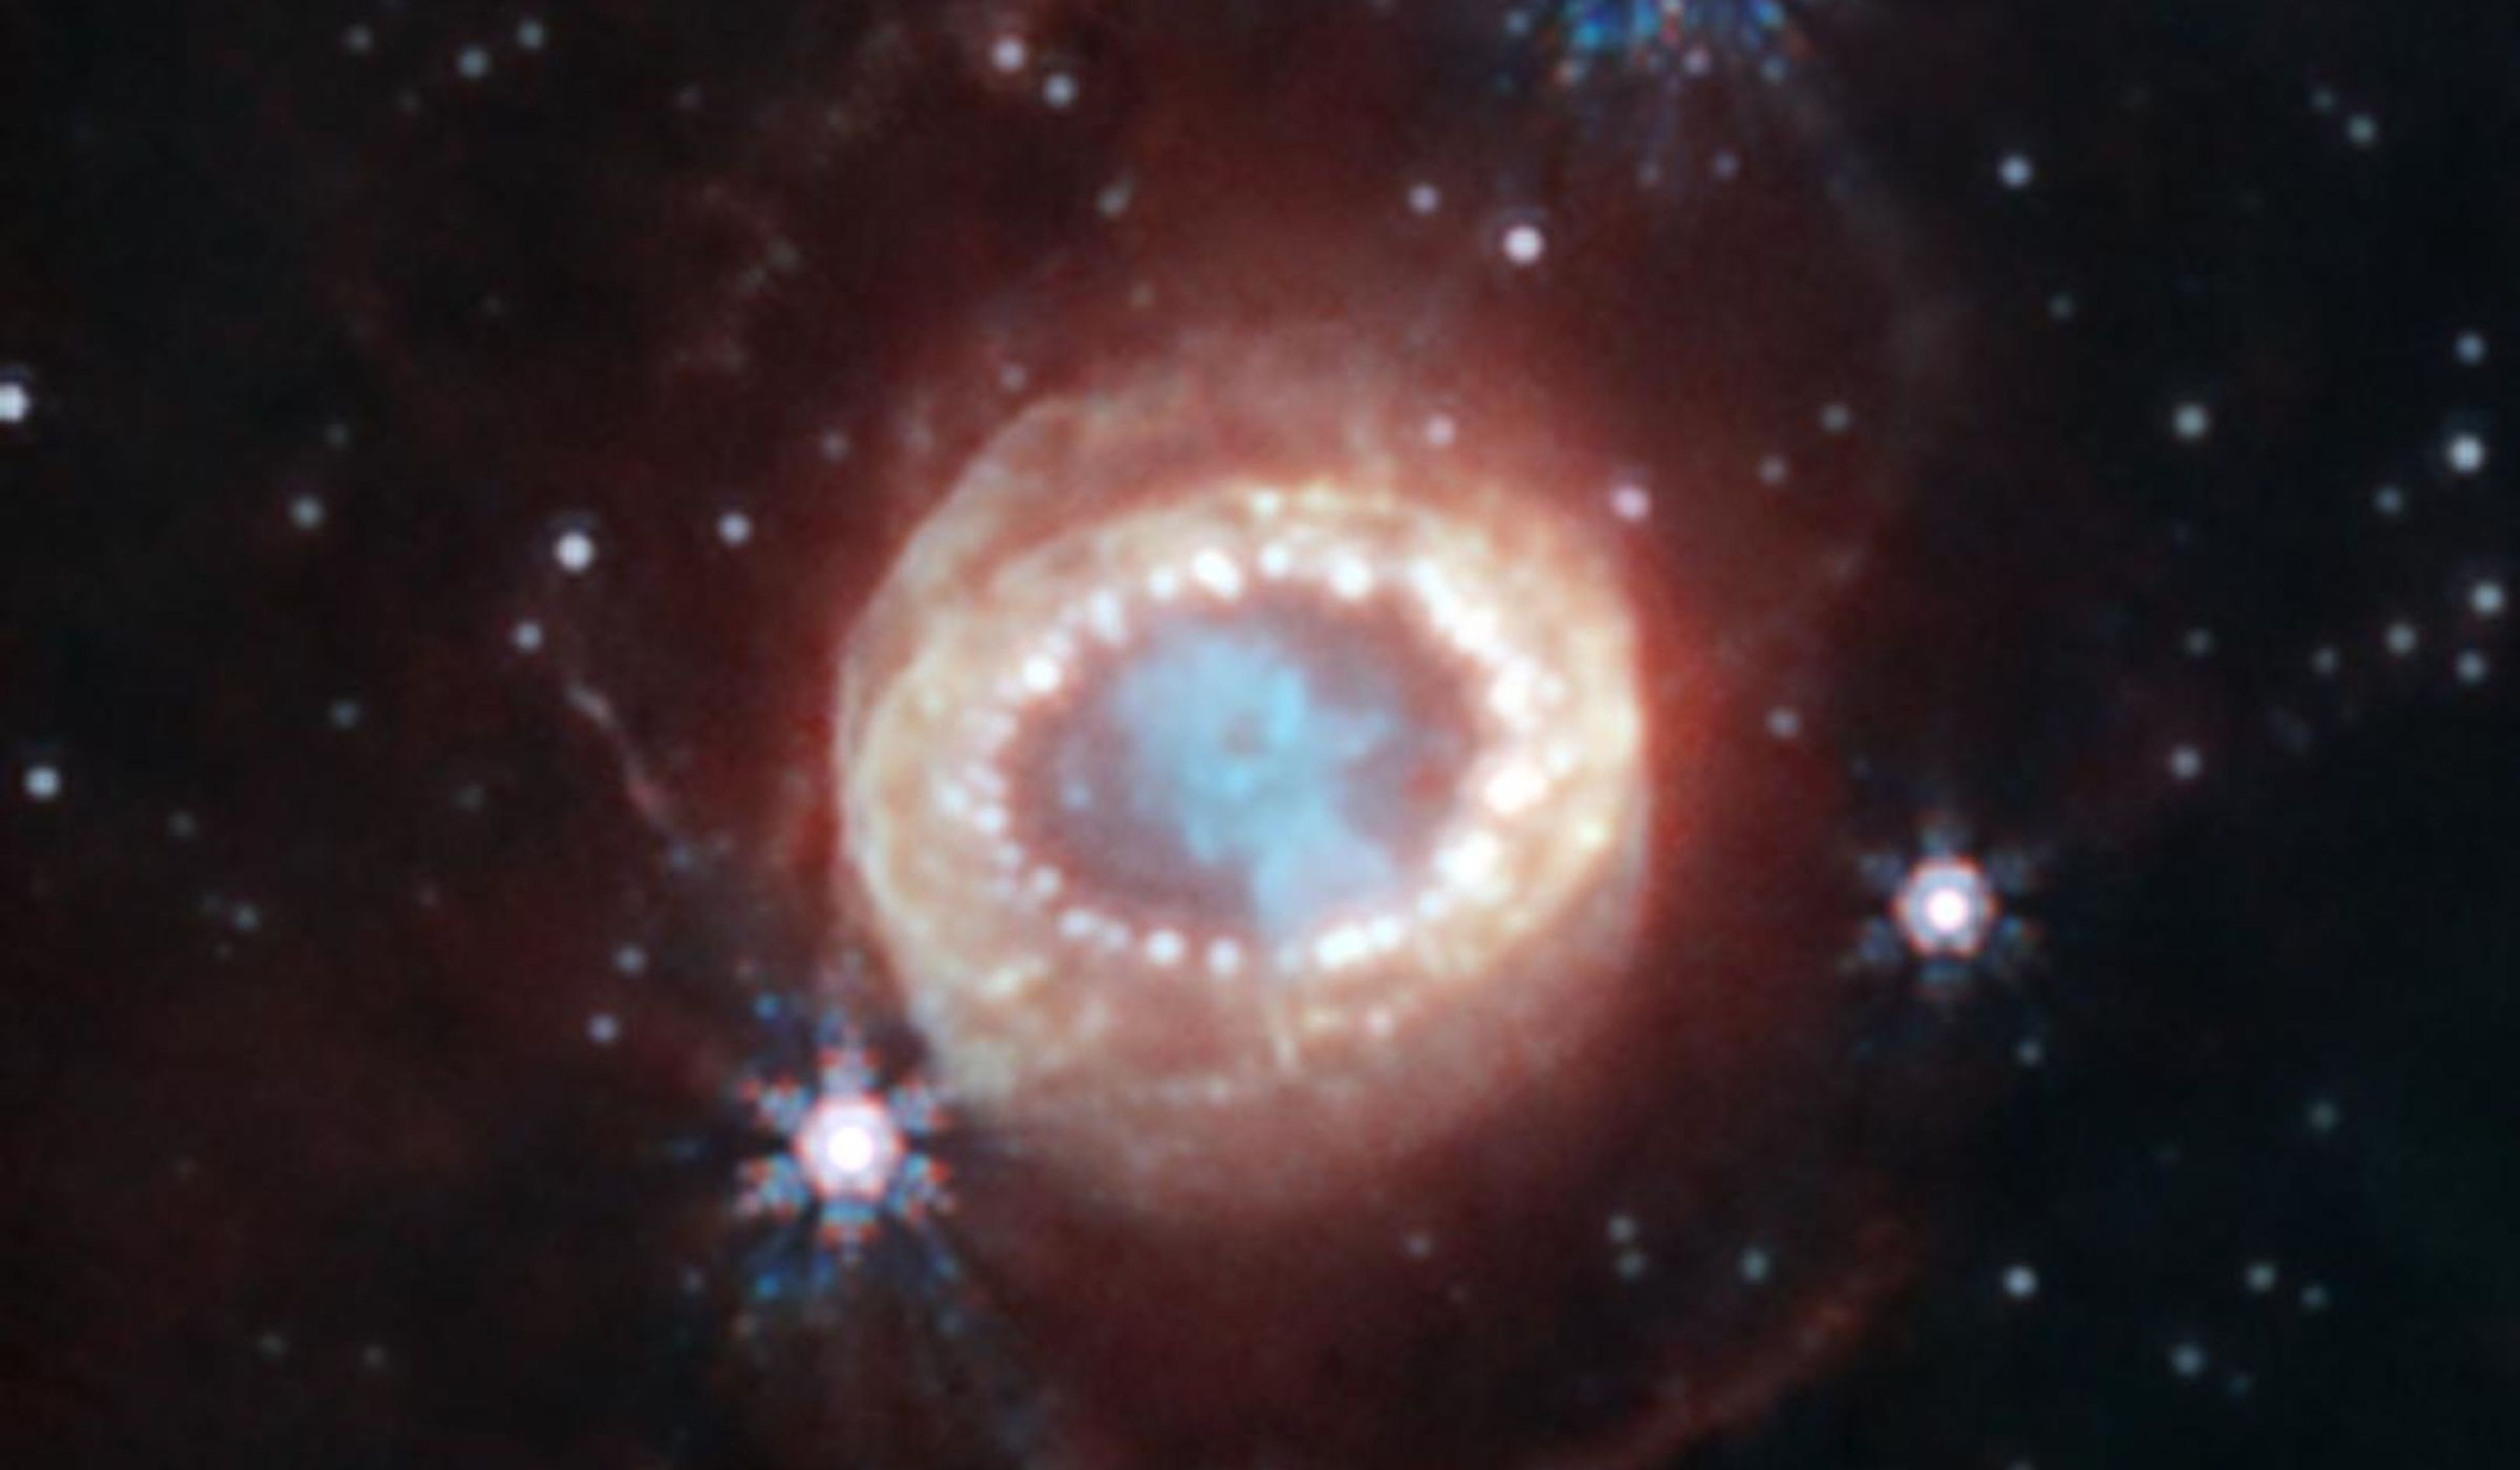 Webb’s NIRCam (Near-Infrared Camera) captured this detailed image of SN 1987A (Supernova 1987A) NASA